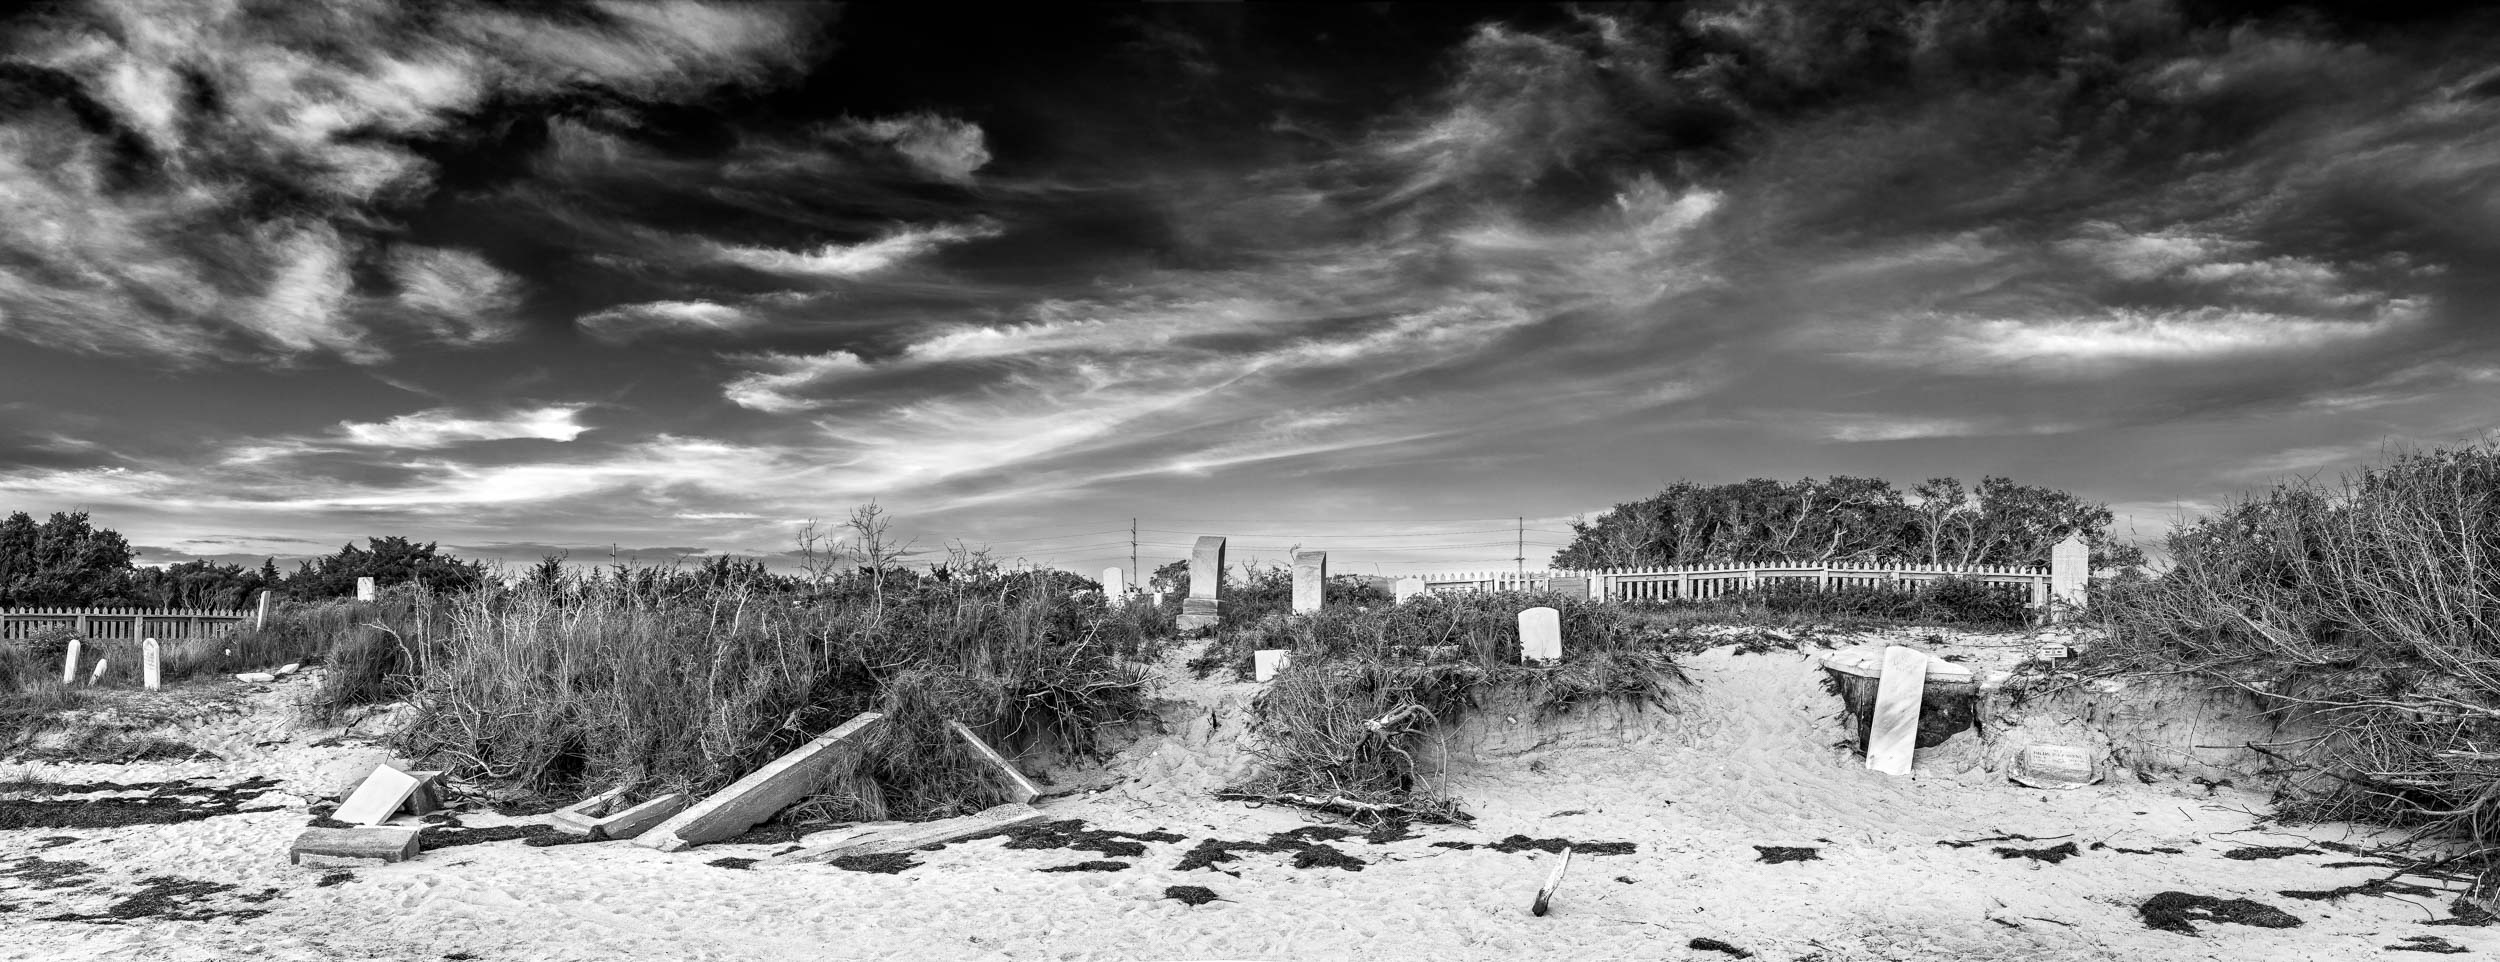 Miller Taylor Upon Sand Art Photography-18.jpg